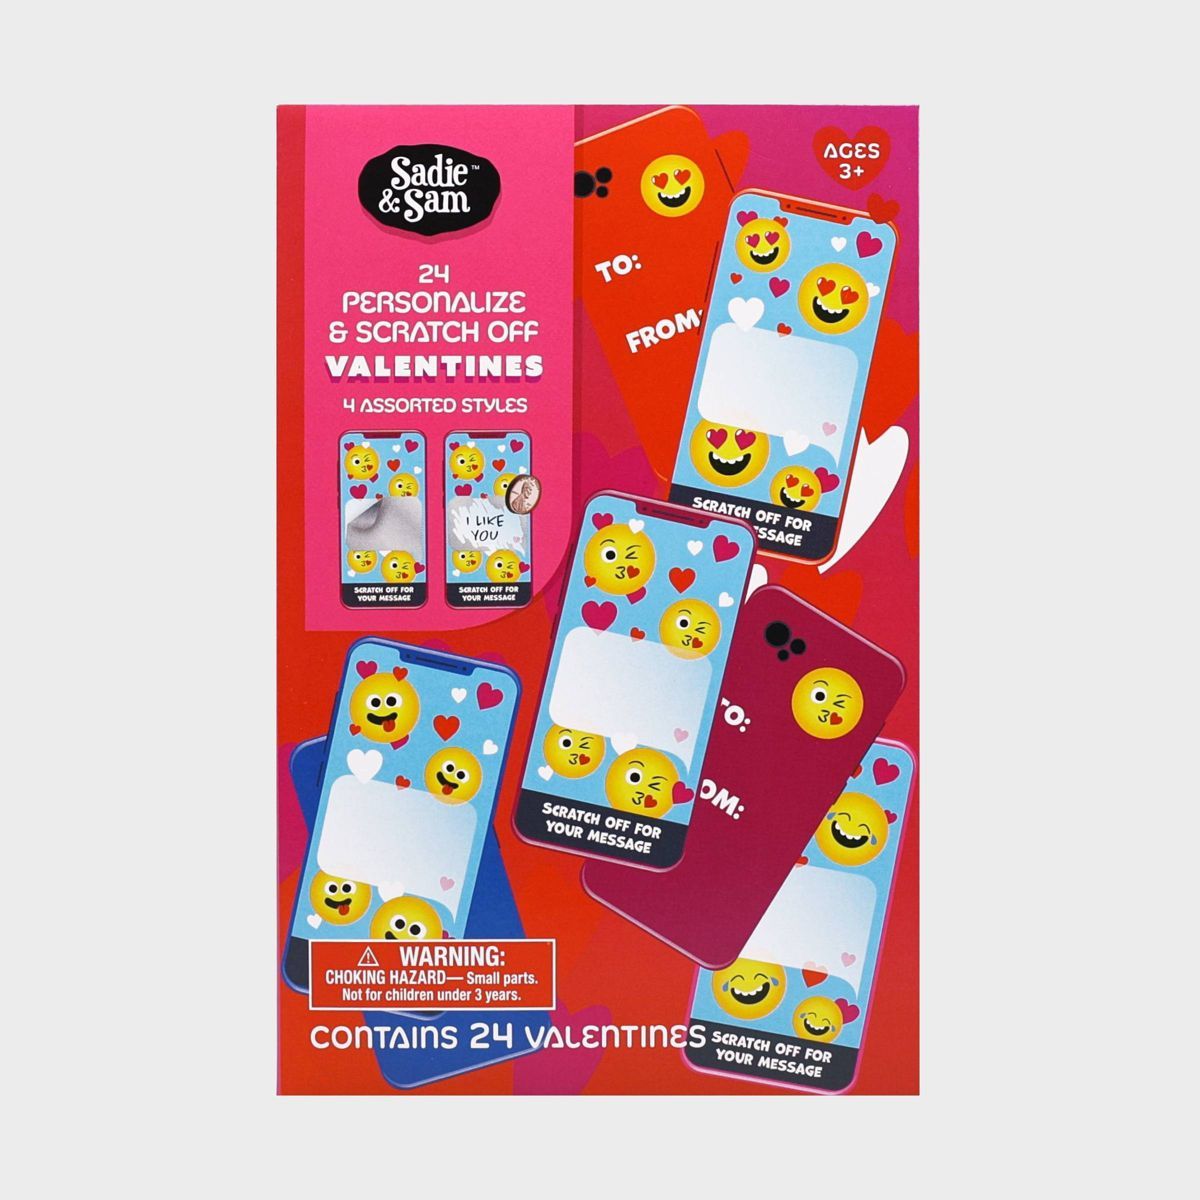 Sadie & Sam 24ct Emoji Valentine's Day Classroom Exchange Cards with Scratch Off Stickers | Target